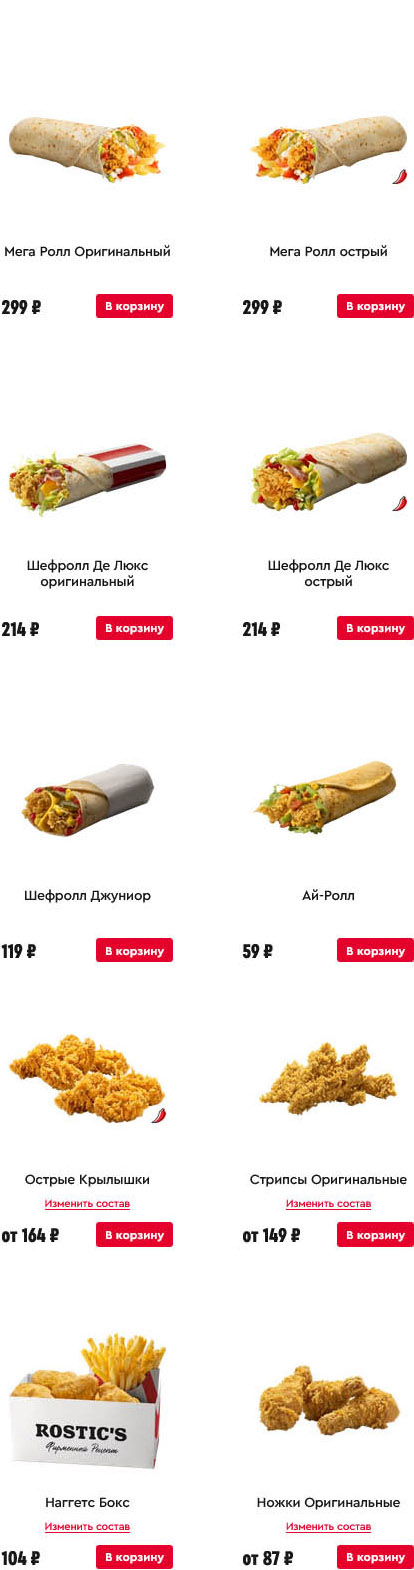 Тольятти сайт KFC меню